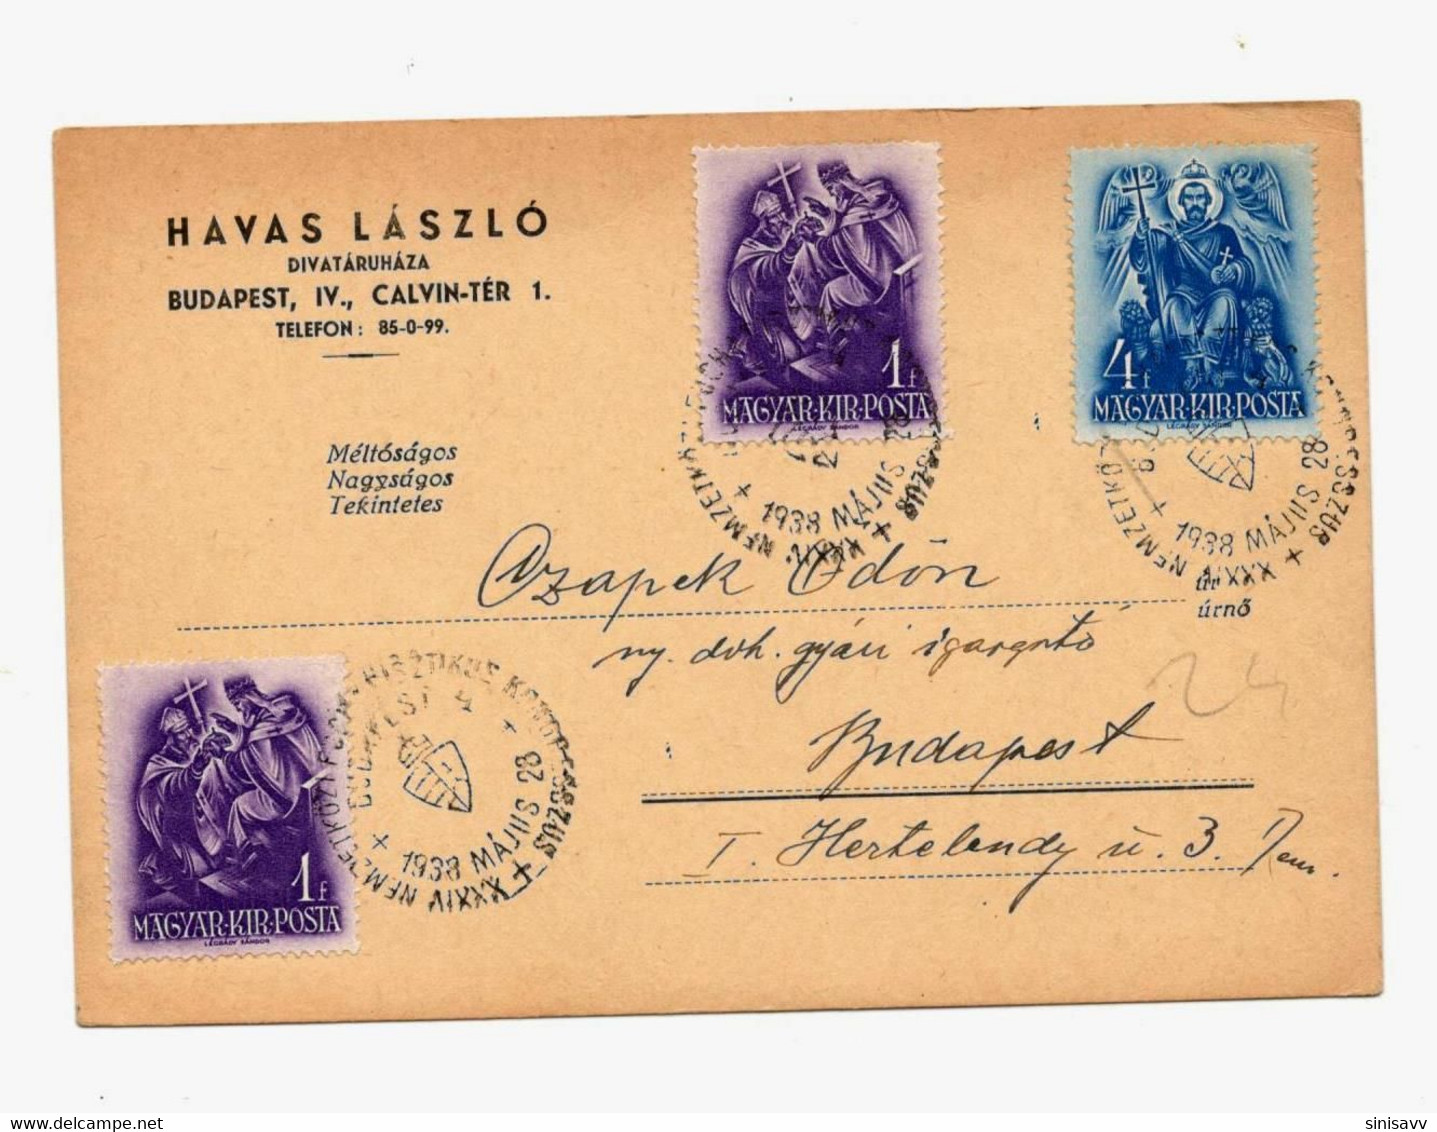 HUNGARY - HAVAS LASZLO - XXXIV. Nemzetközi Eucharisztikus Kongresszus 1938 - Foglietto Ricordo